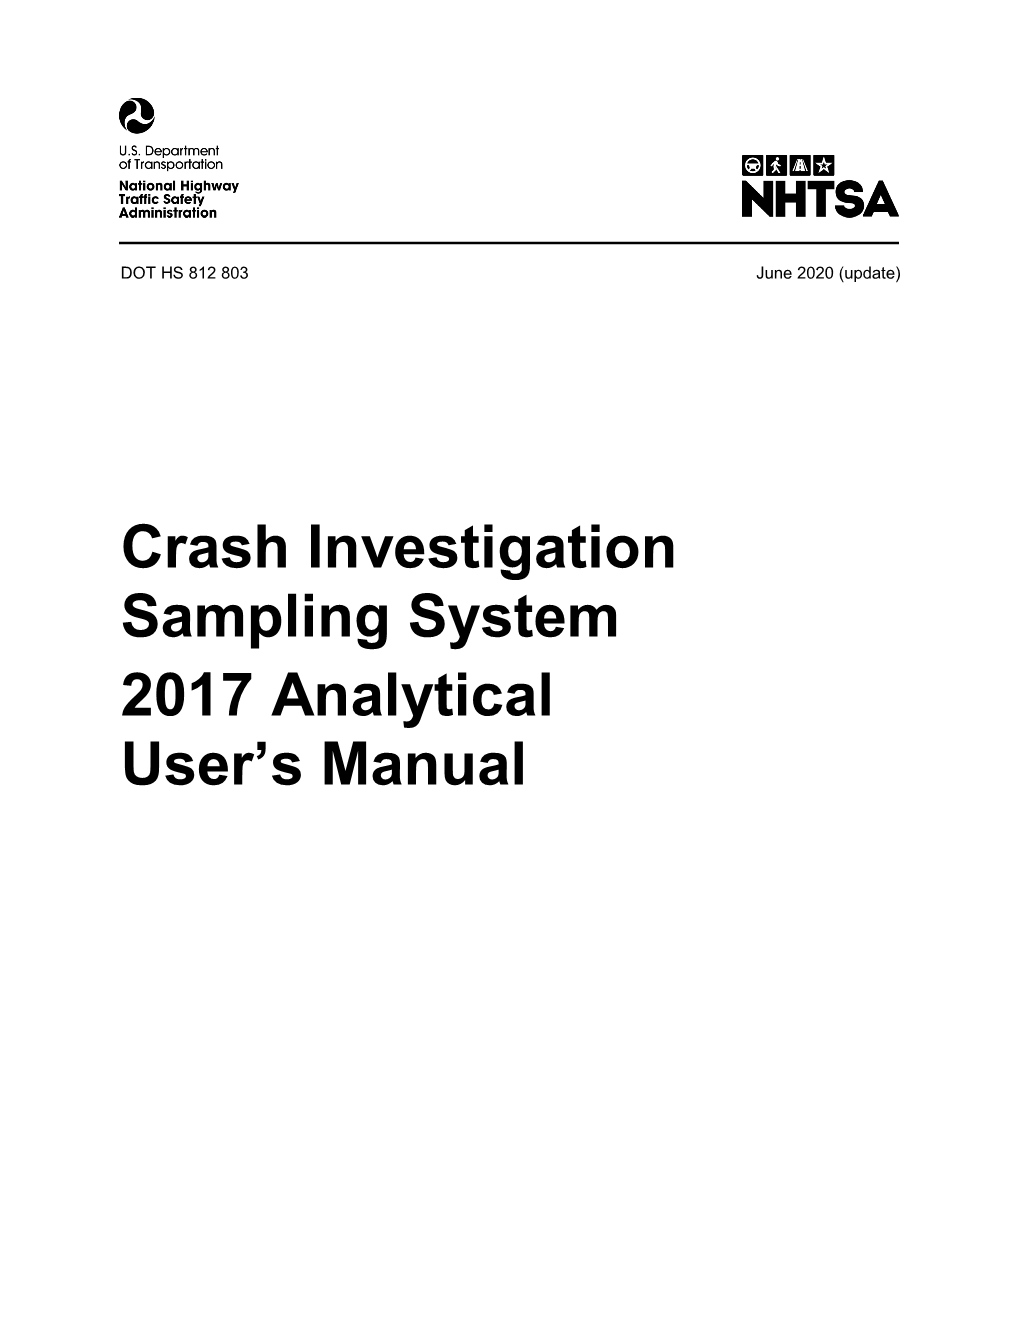 Crash Investigation Sampling System (CISS) 2017 Analytical User's Manual